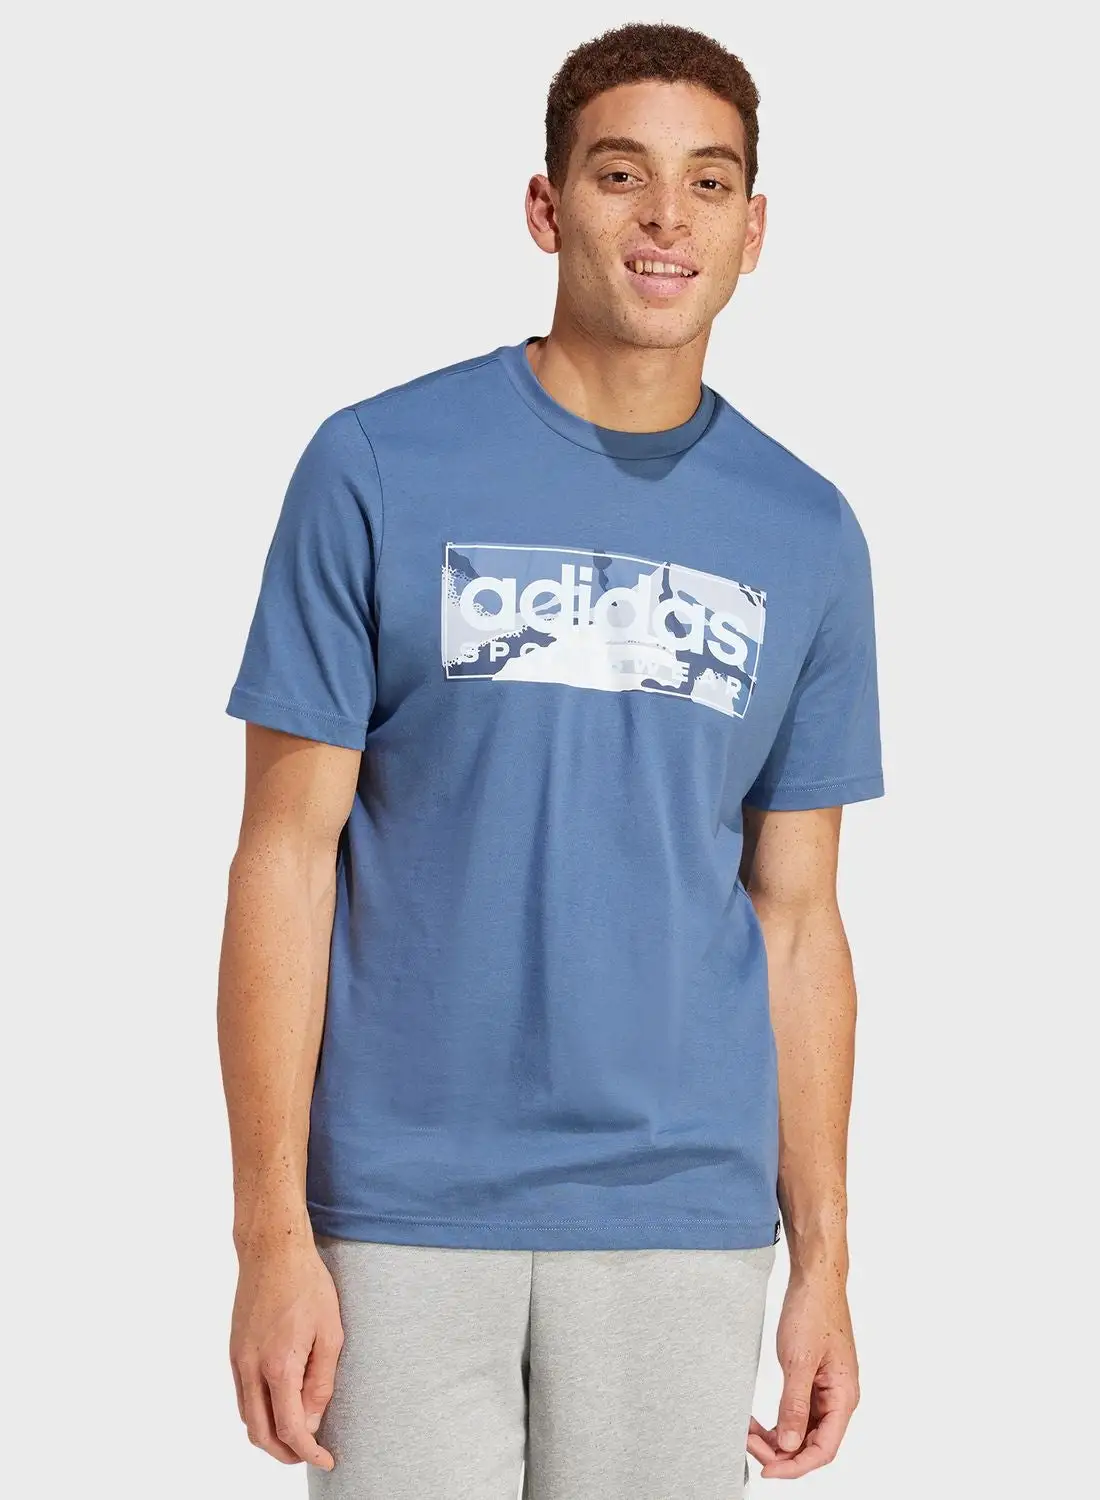 Adidas Camo Graphic T-Shirt